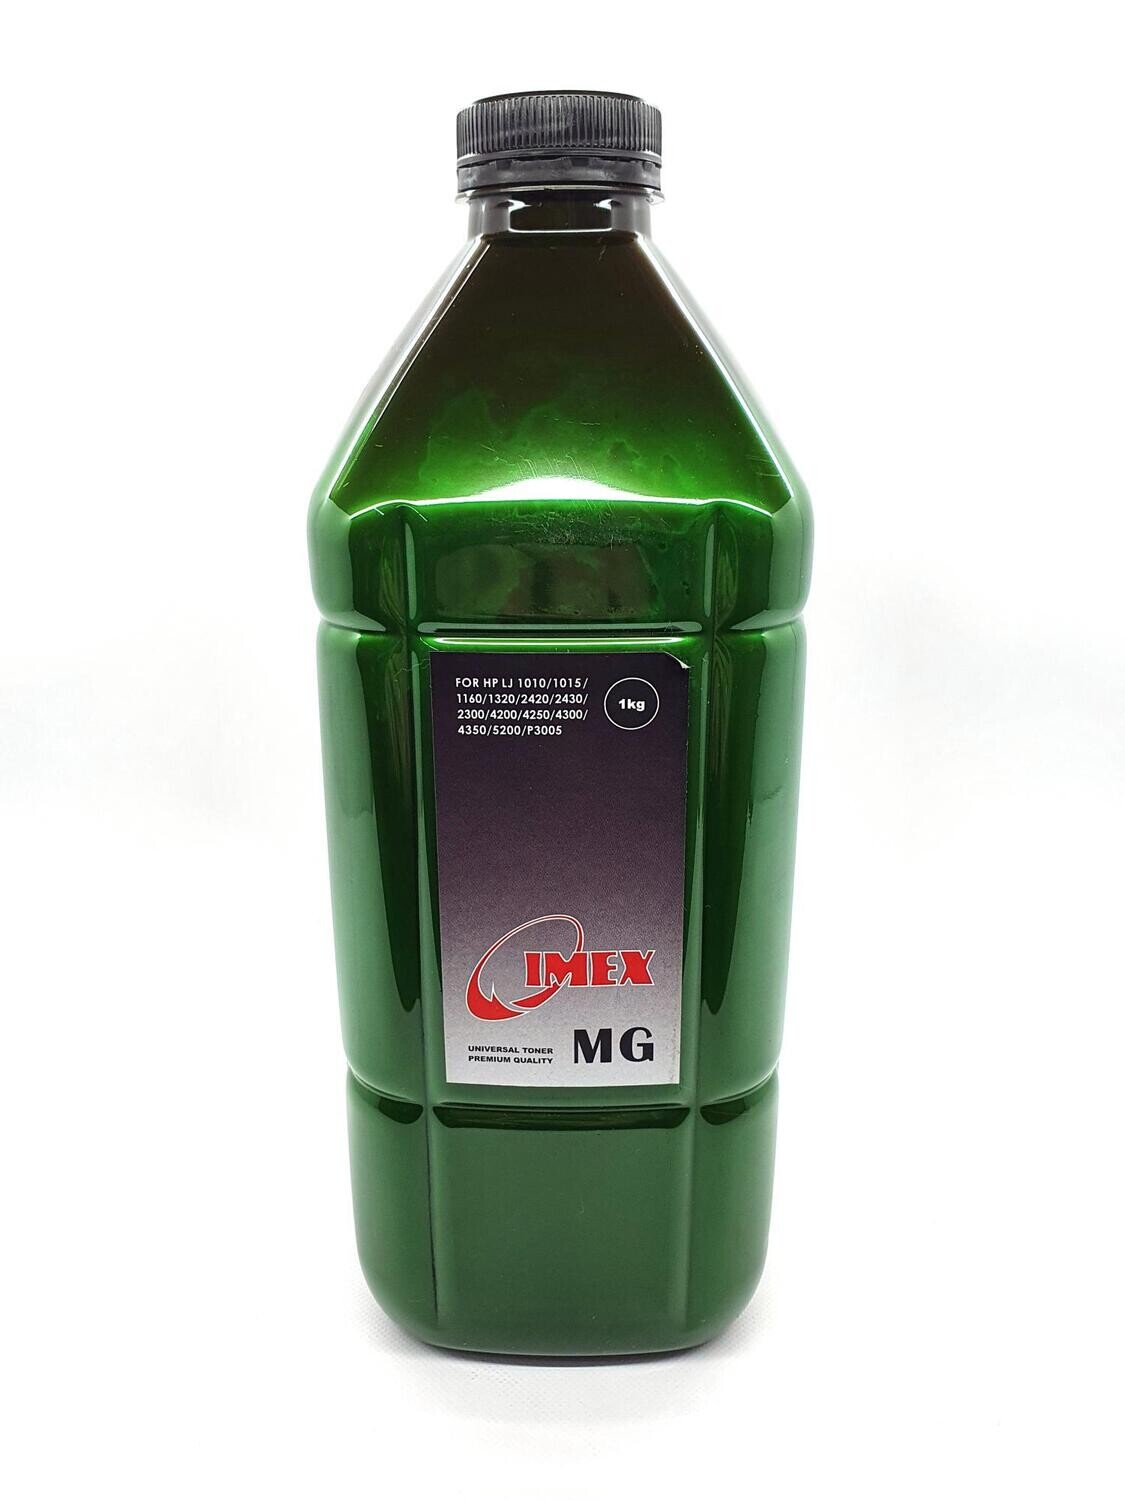 Тонер для HP LJ 1010/1200/2035 /Pro400/M402/M426/M428/Canon 212 тип MG Green ATM 1 кг, канистра.